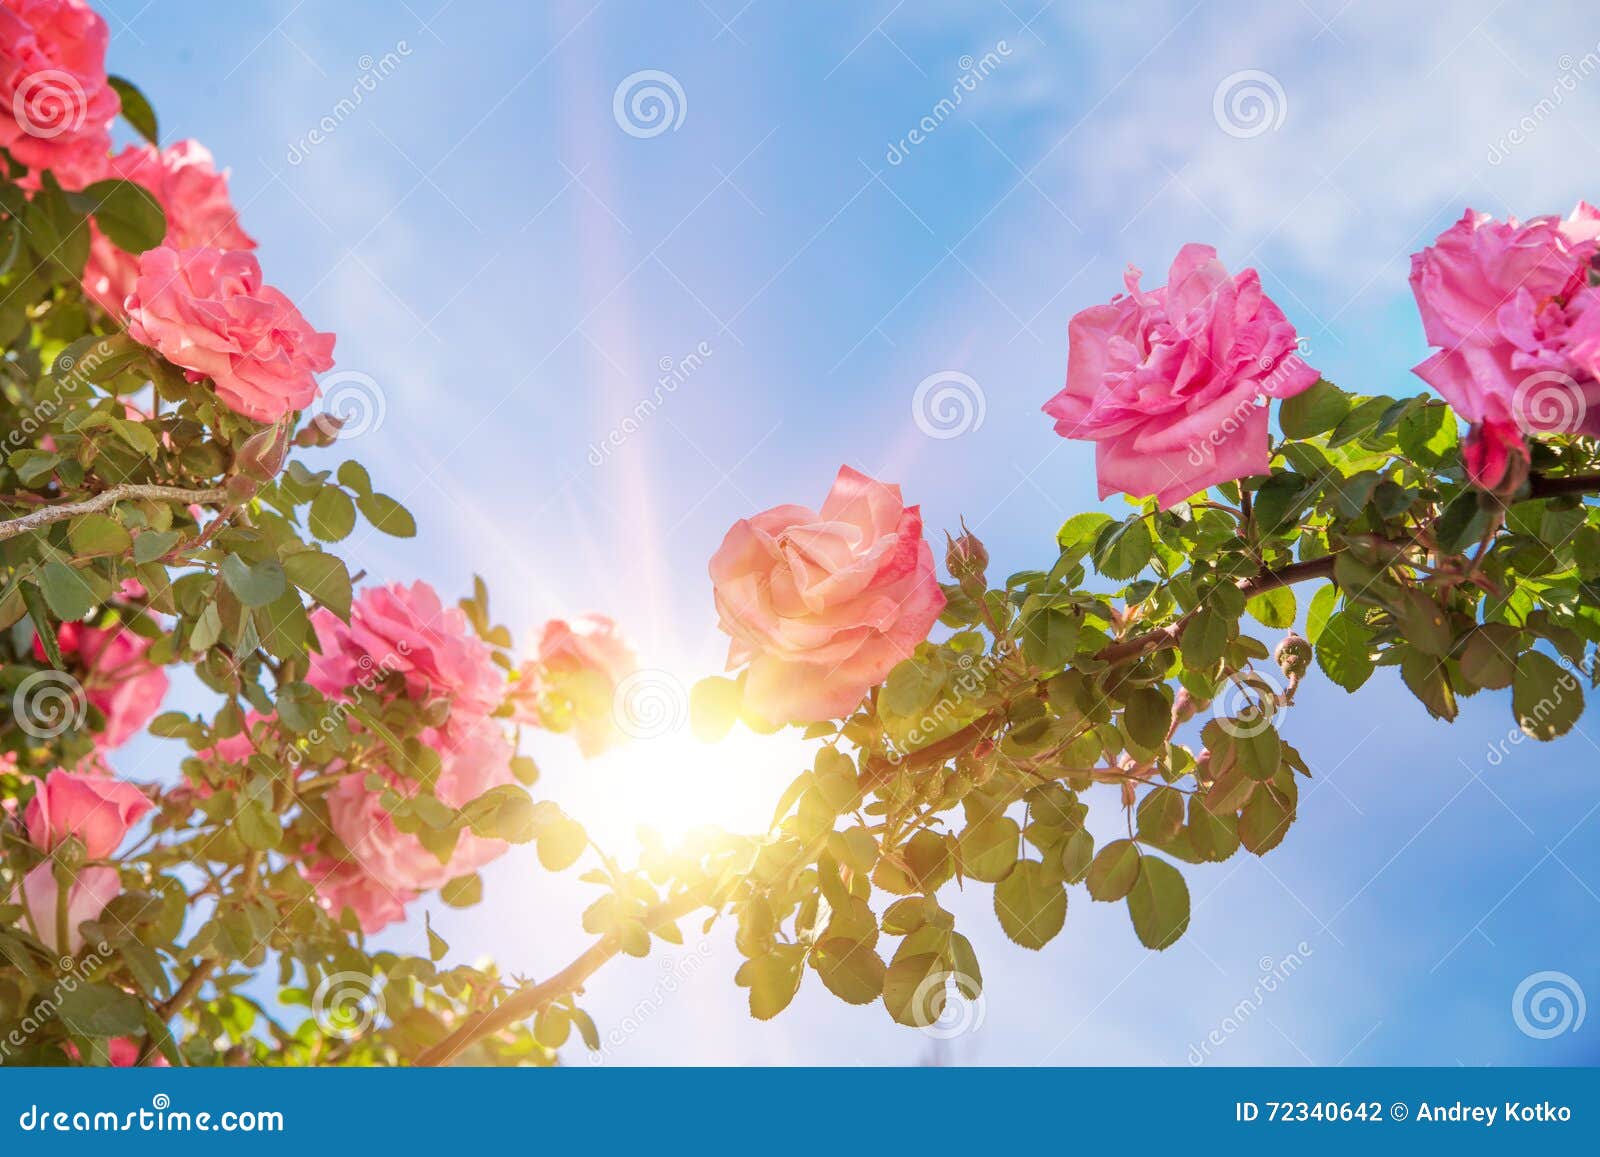 Rose garden over sky. stock photo. Image of single, summer - 72340642